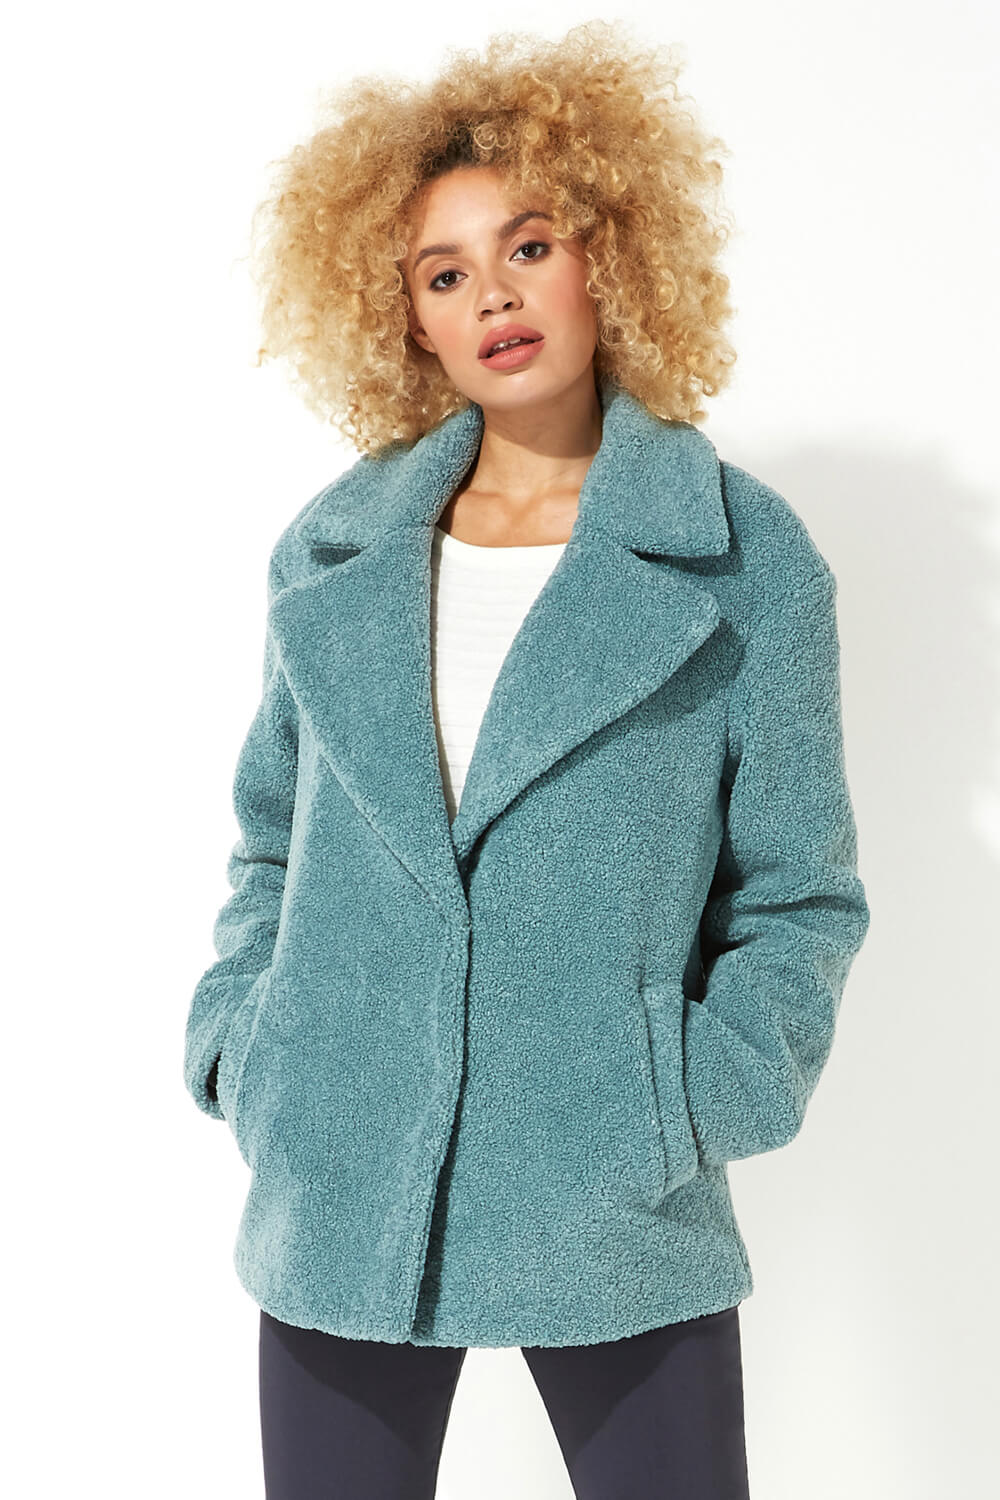 Short Soft Faux Fur Teddy Coat